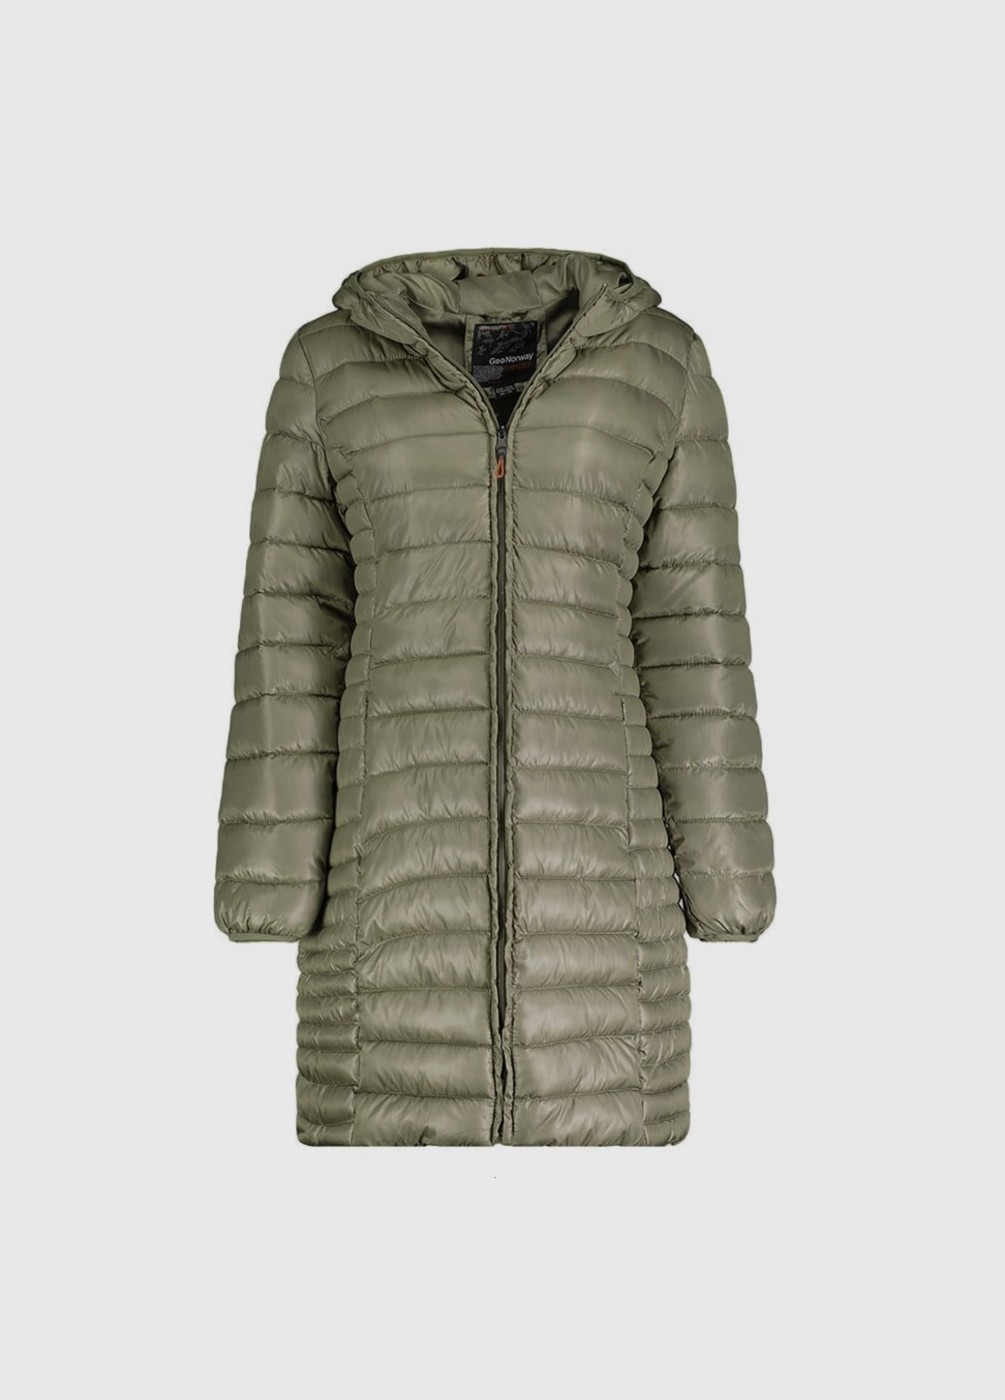 Куртка демисезонная - женская куртка Geographical Norway, S, S